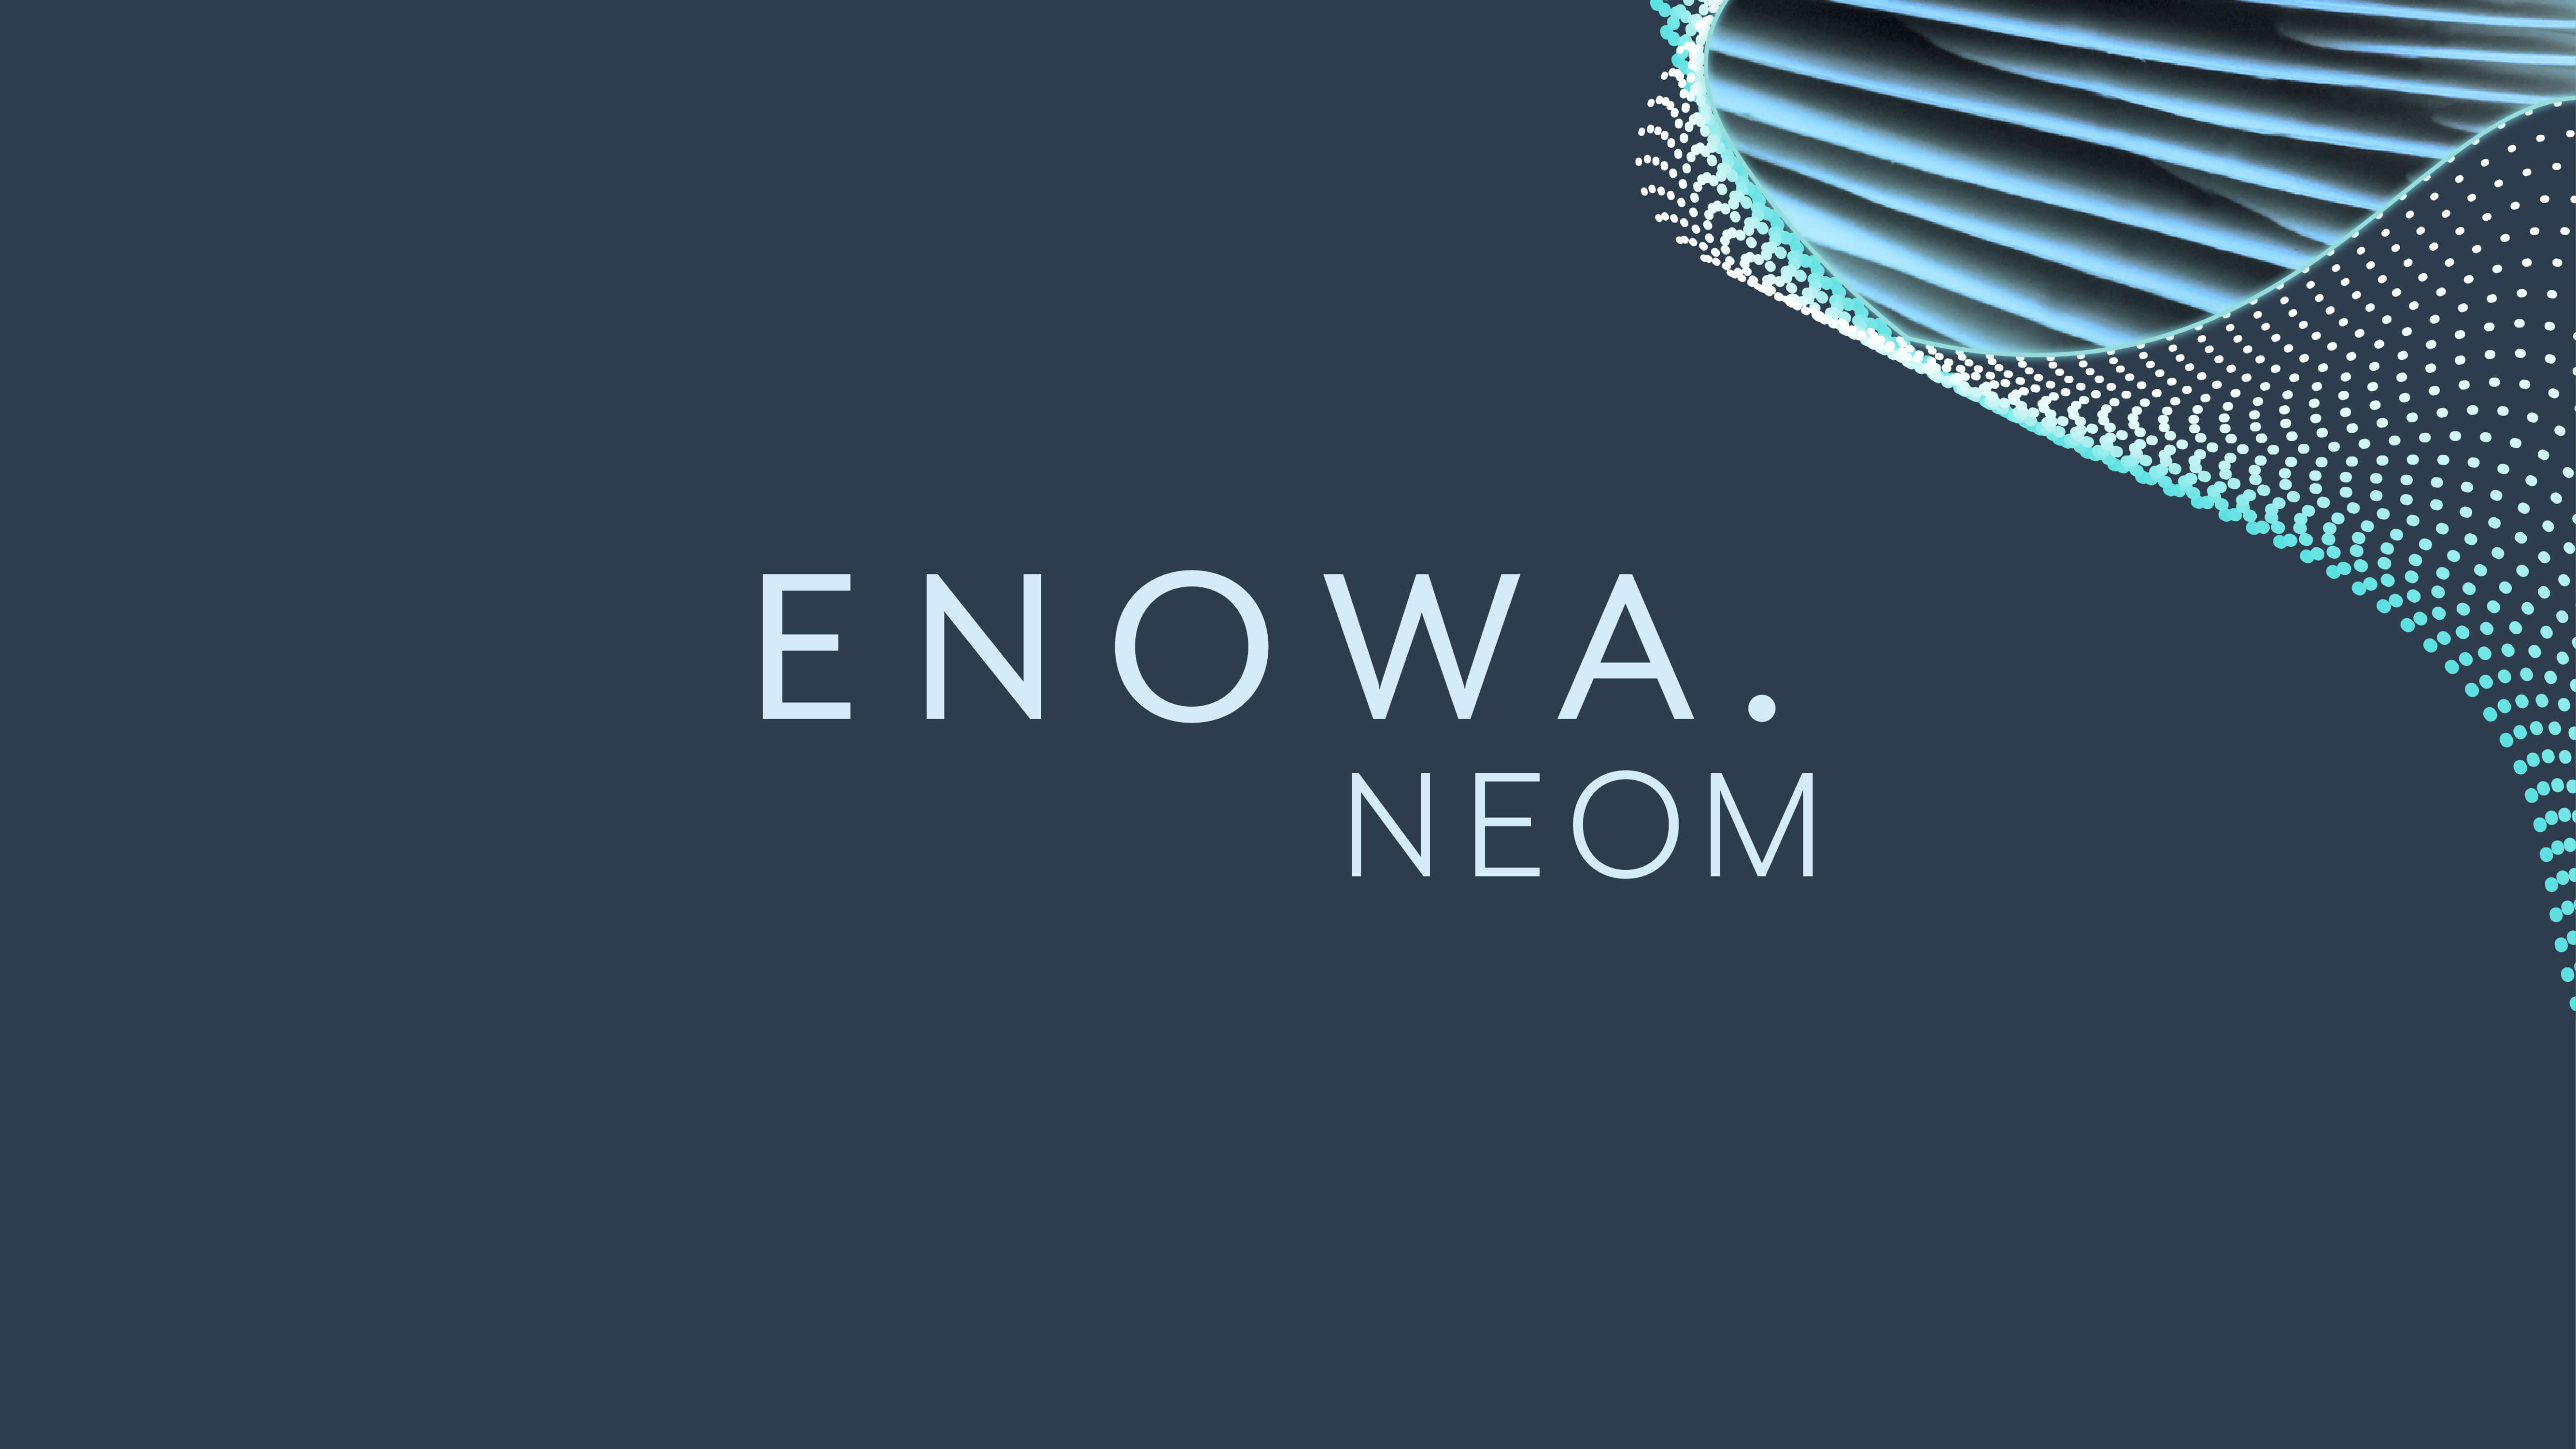 neom-launches-enowa